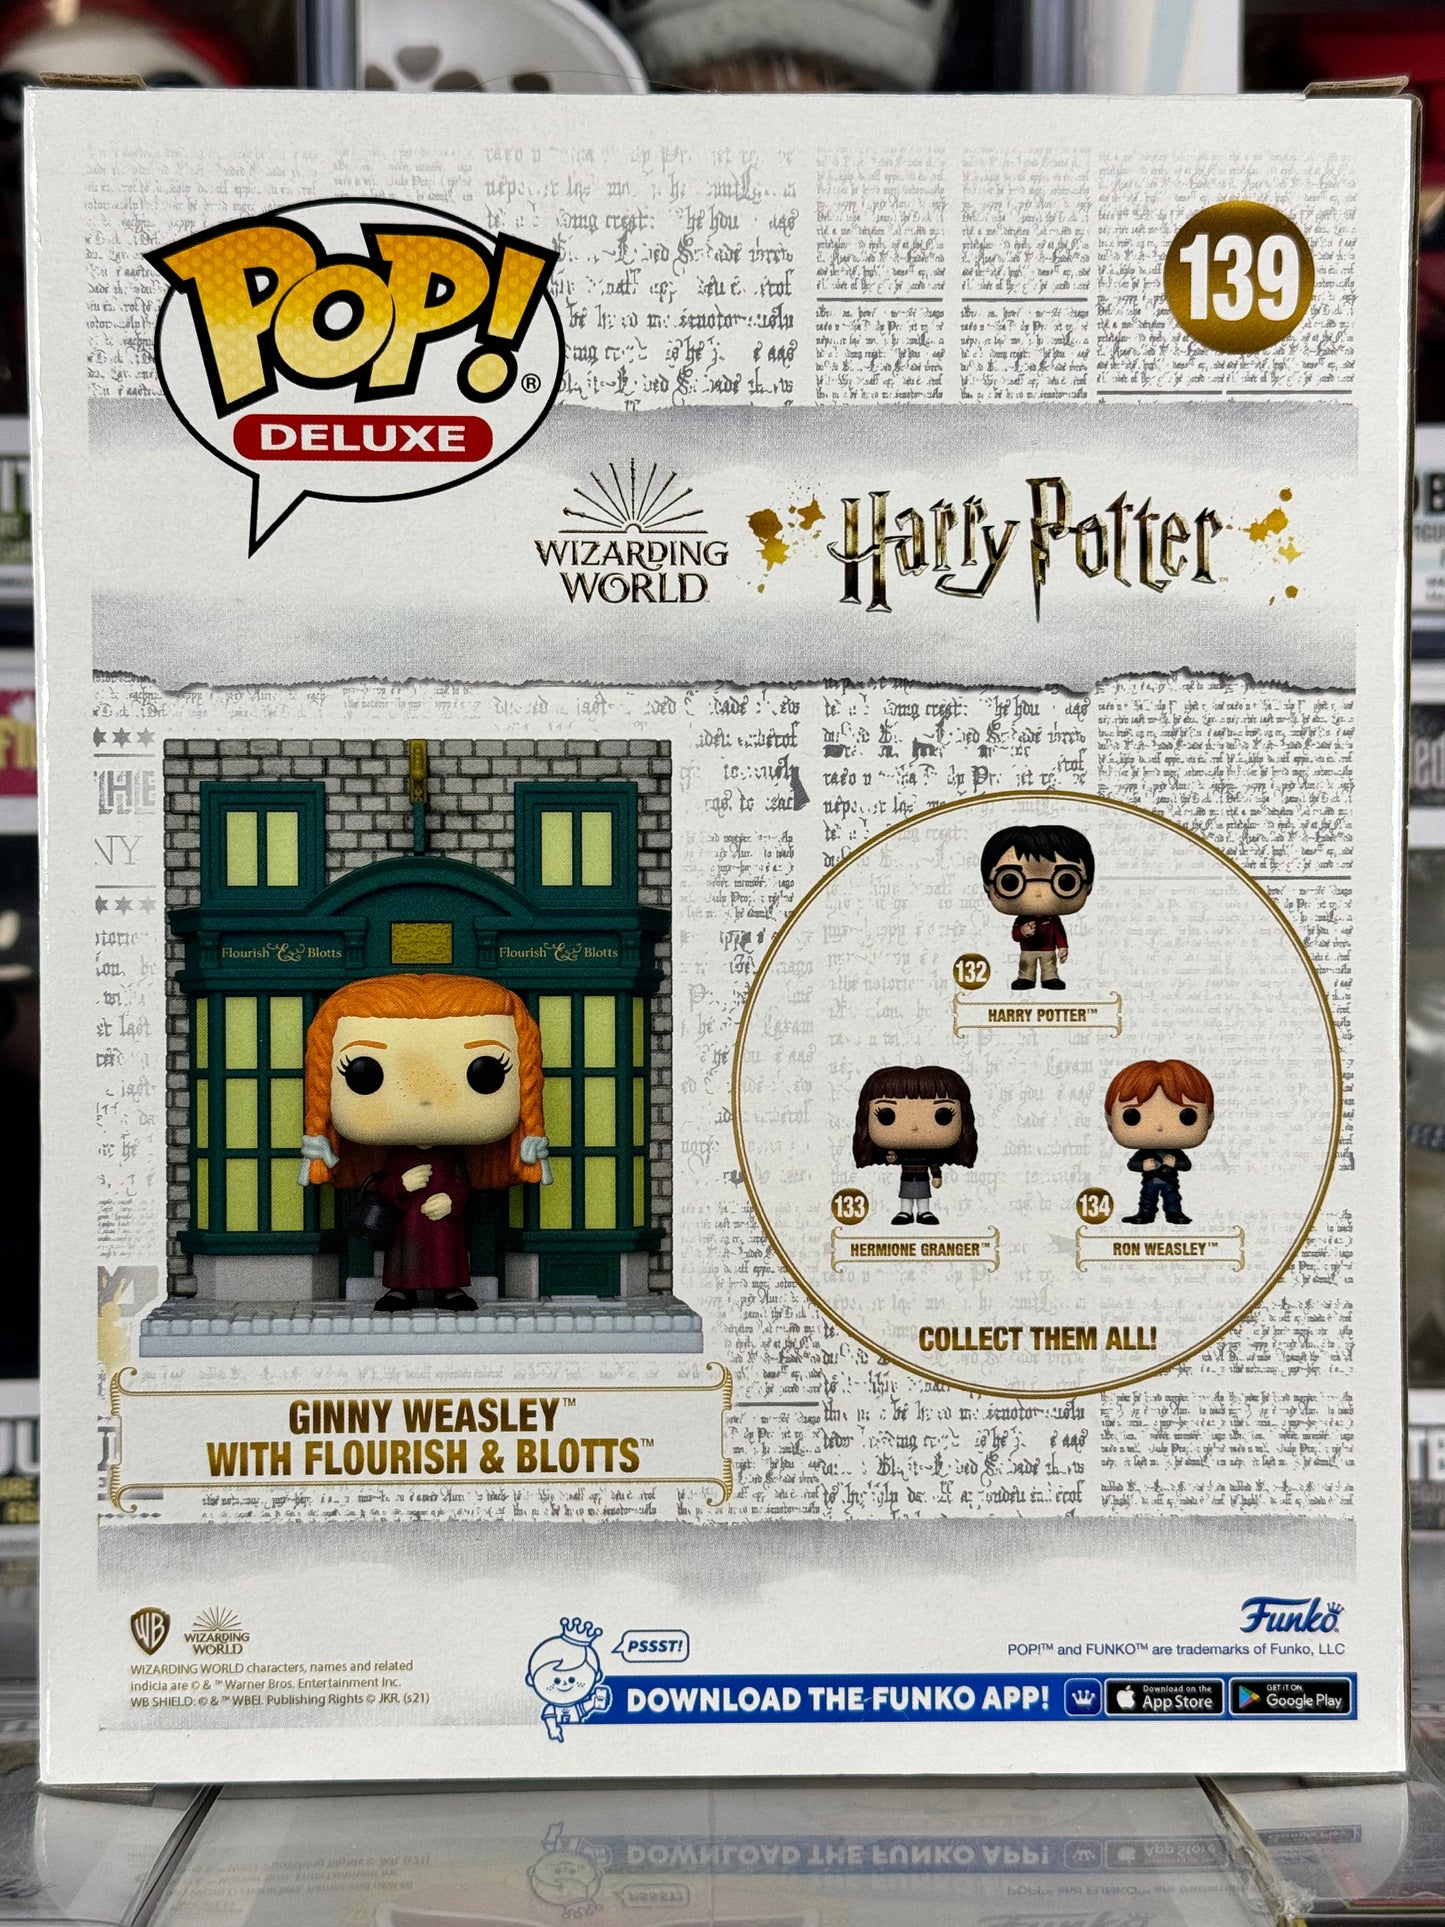 Wizarding Word of Harry Potter - Deluxe - Ginny Weasley With Flourish & Blotts (139)